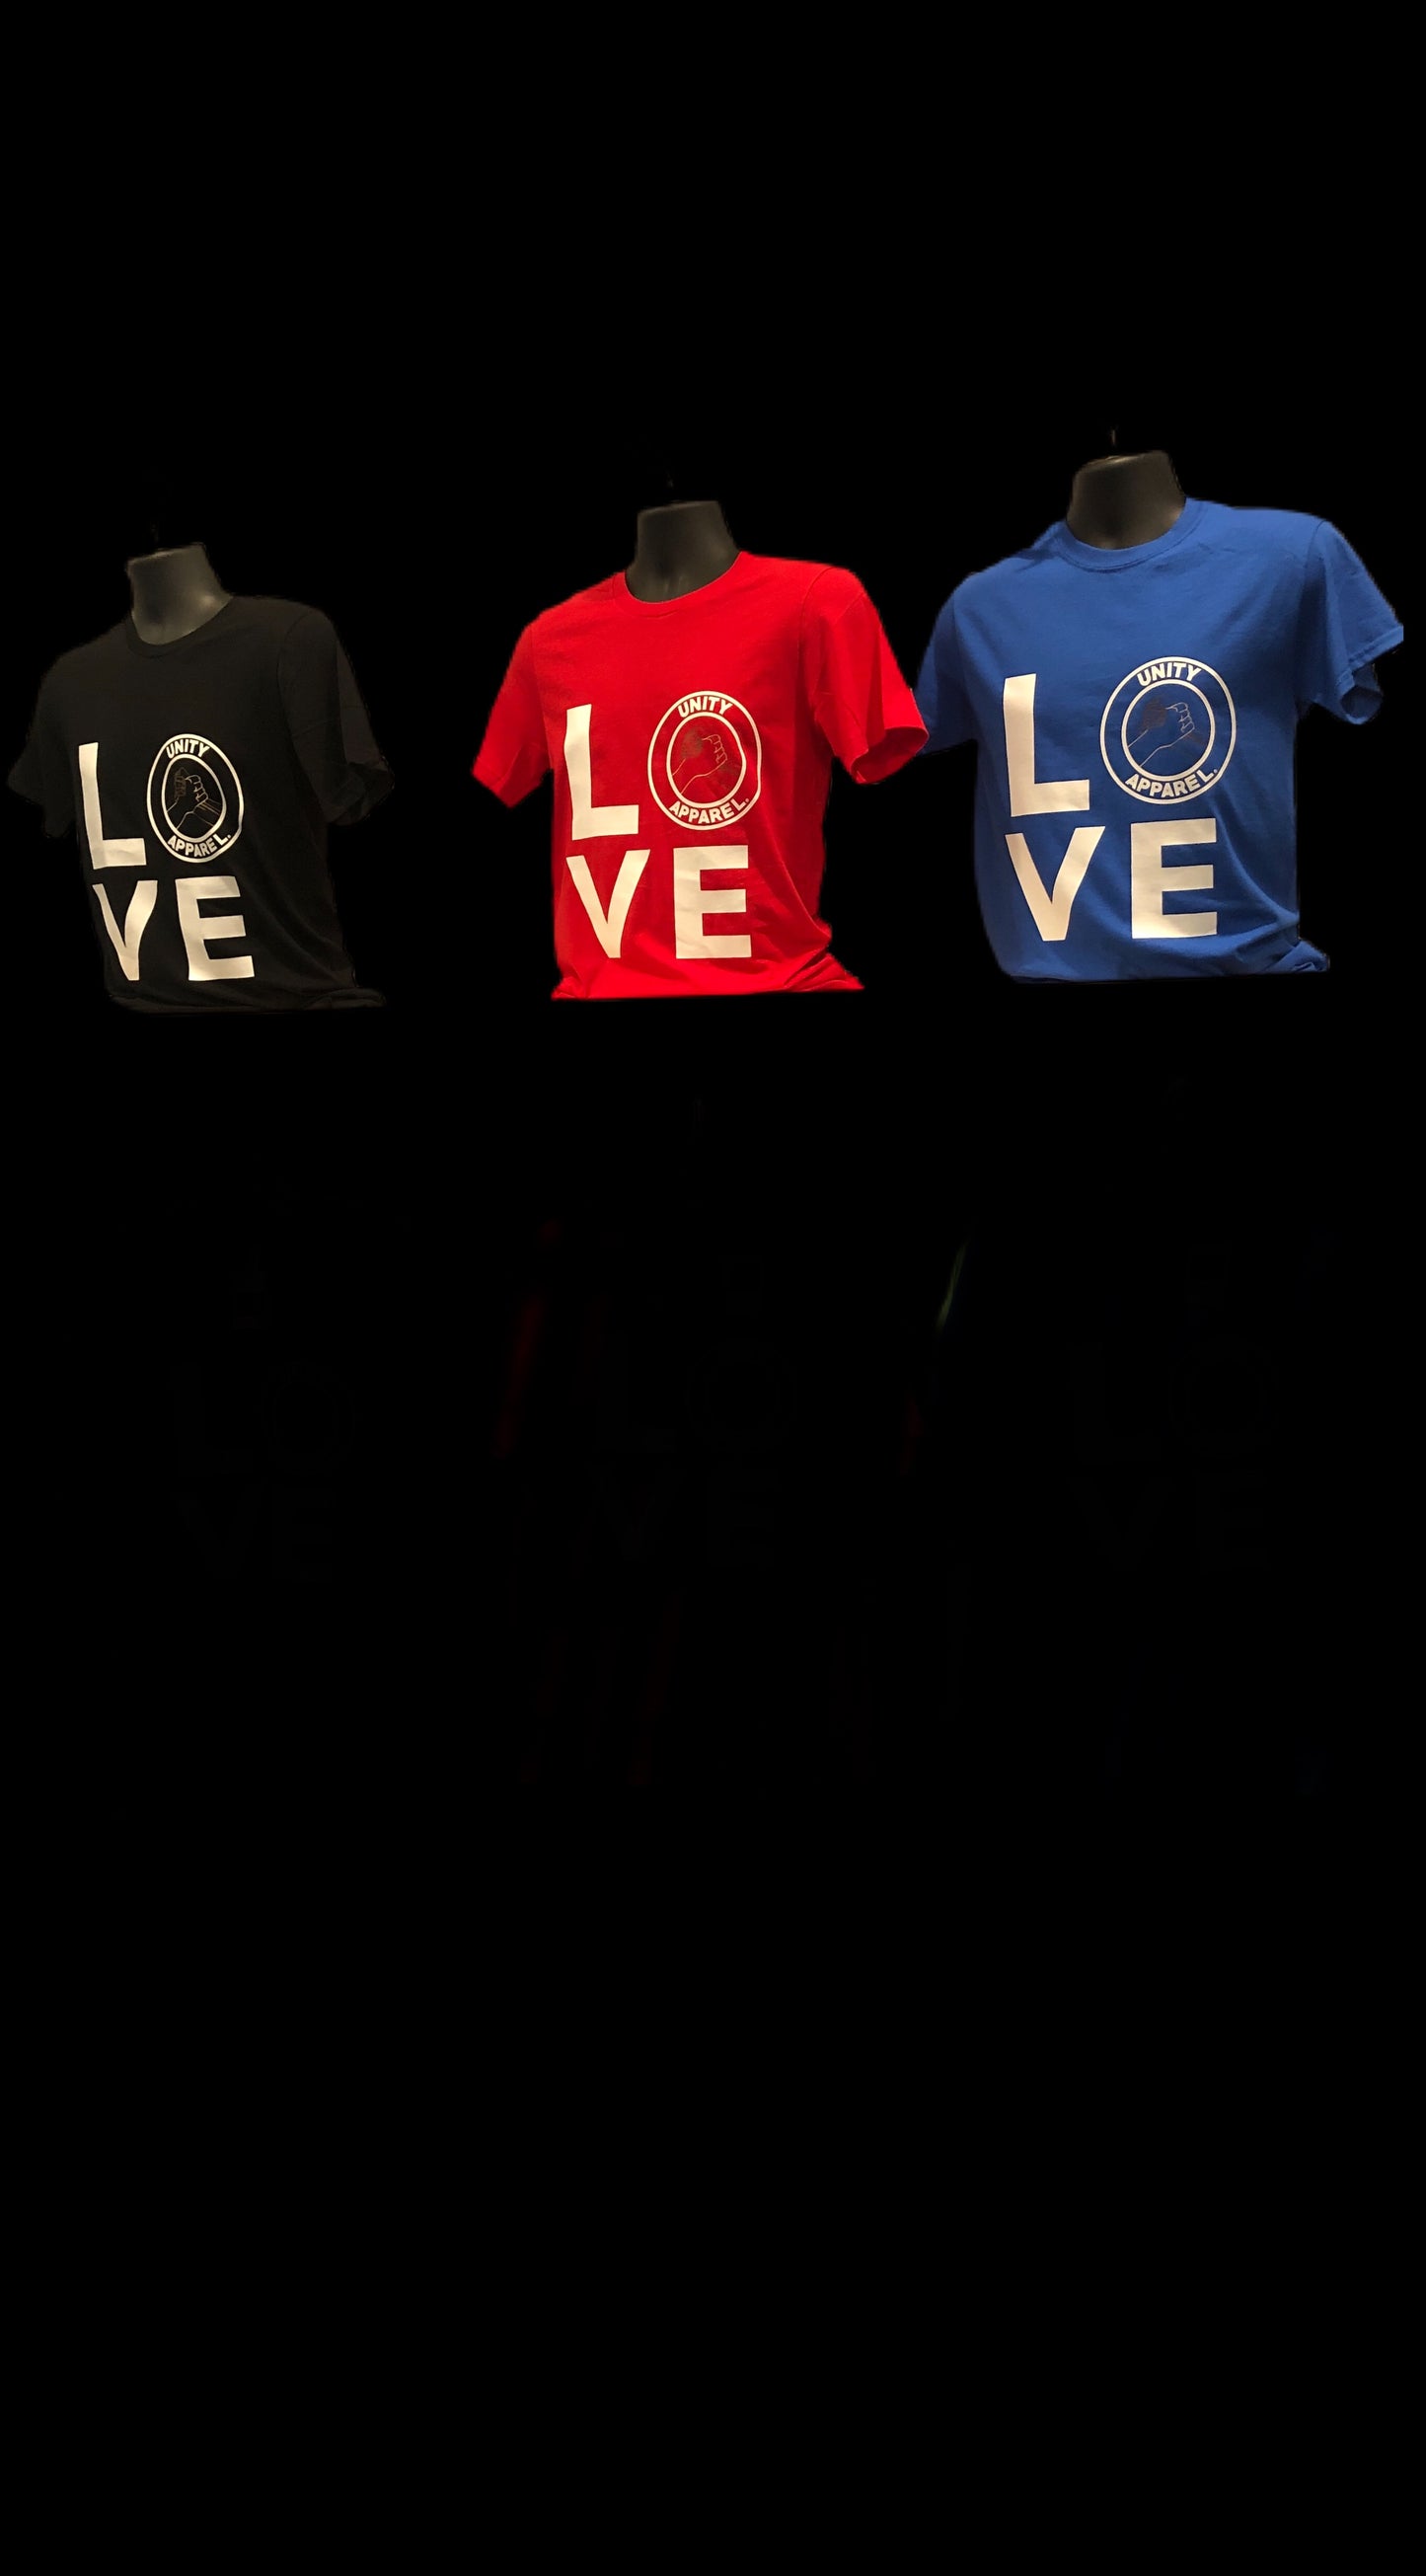 The Love Shirt